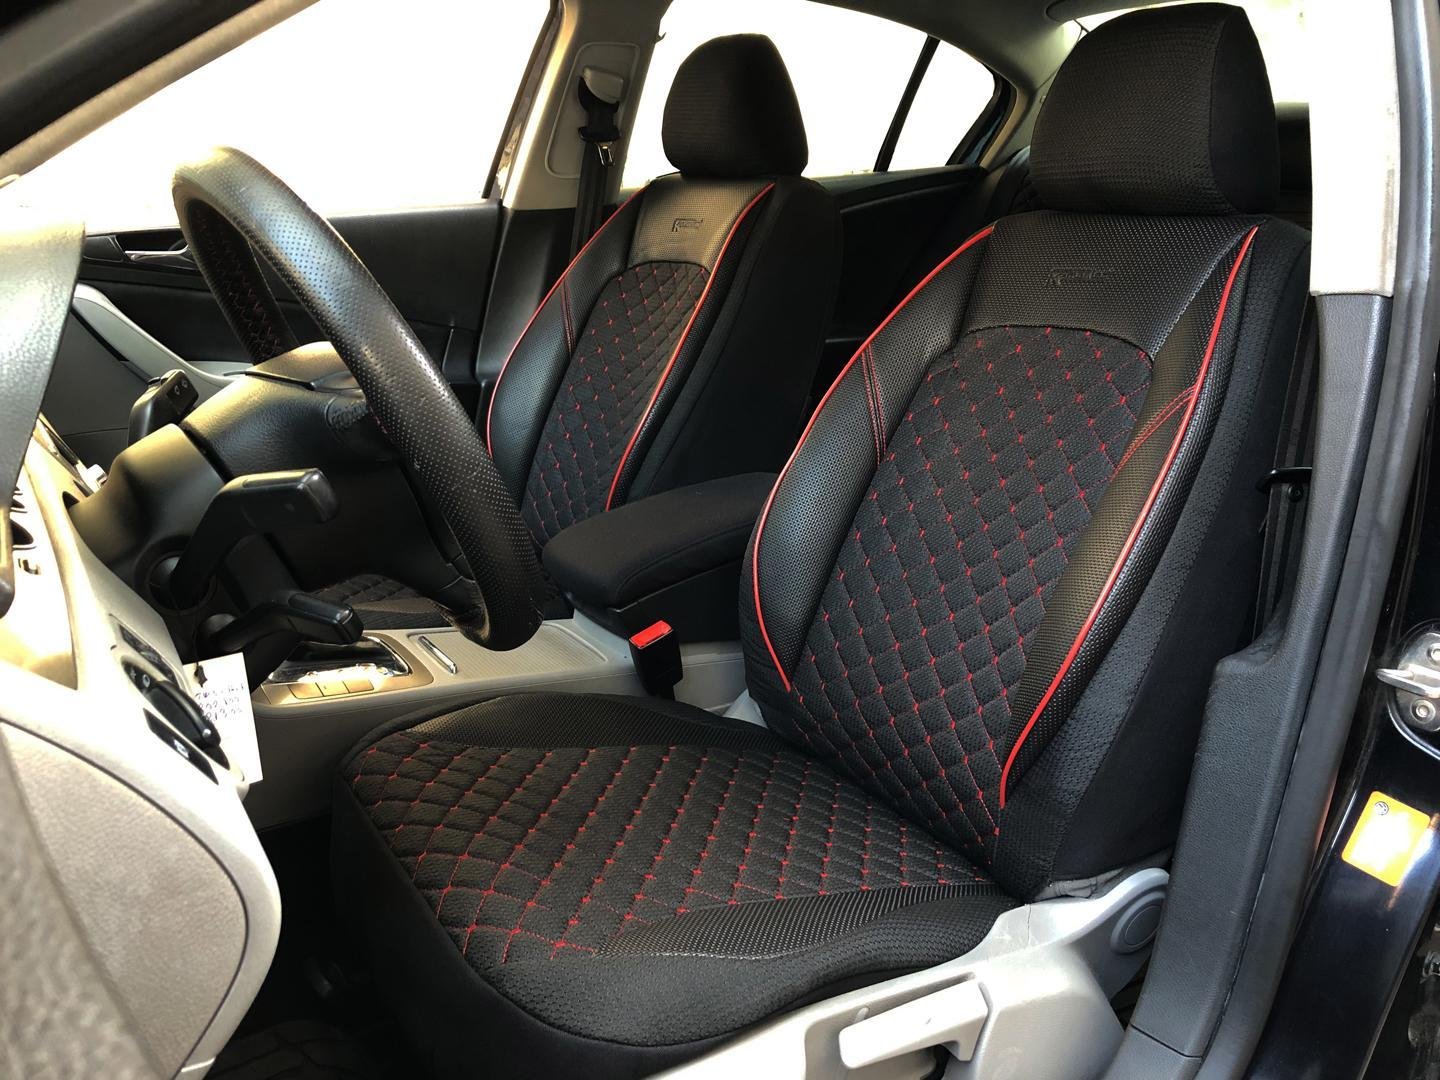 Edge Xtremeauto Red and Black Sport Car Seat Cover Protectors Fiesta Mondeo C-Max S-Max Eco-Sport Focus KA Escort Kuga